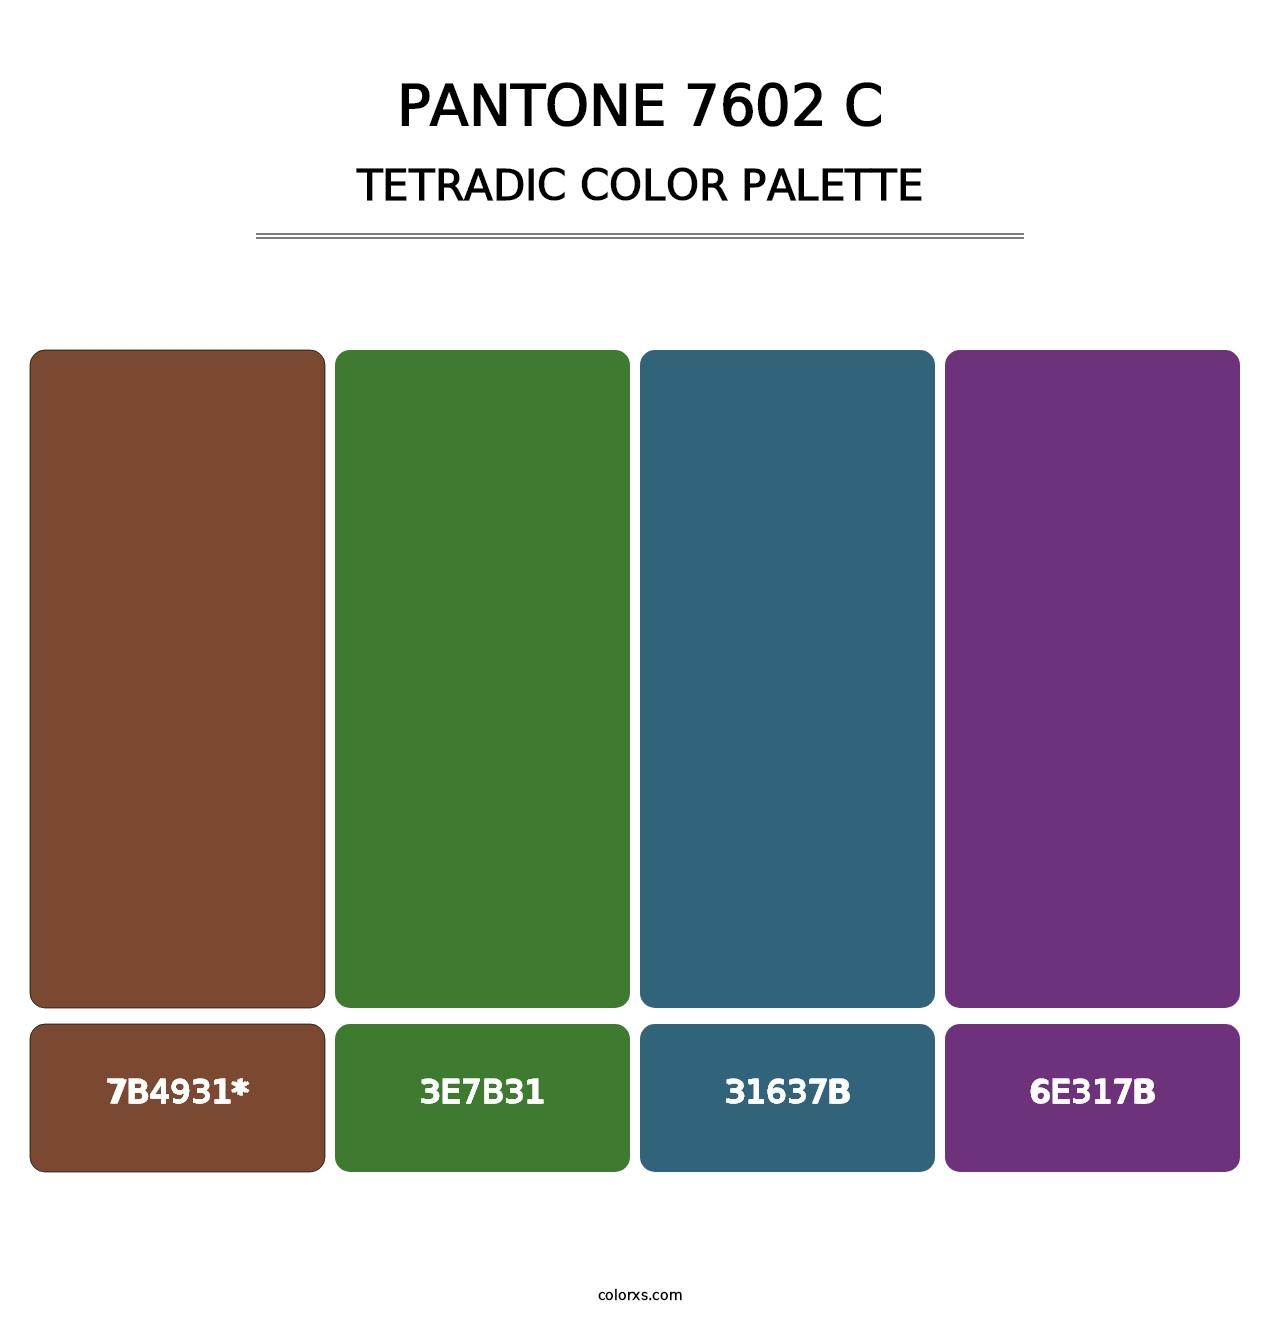 PANTONE 7602 C - Tetradic Color Palette